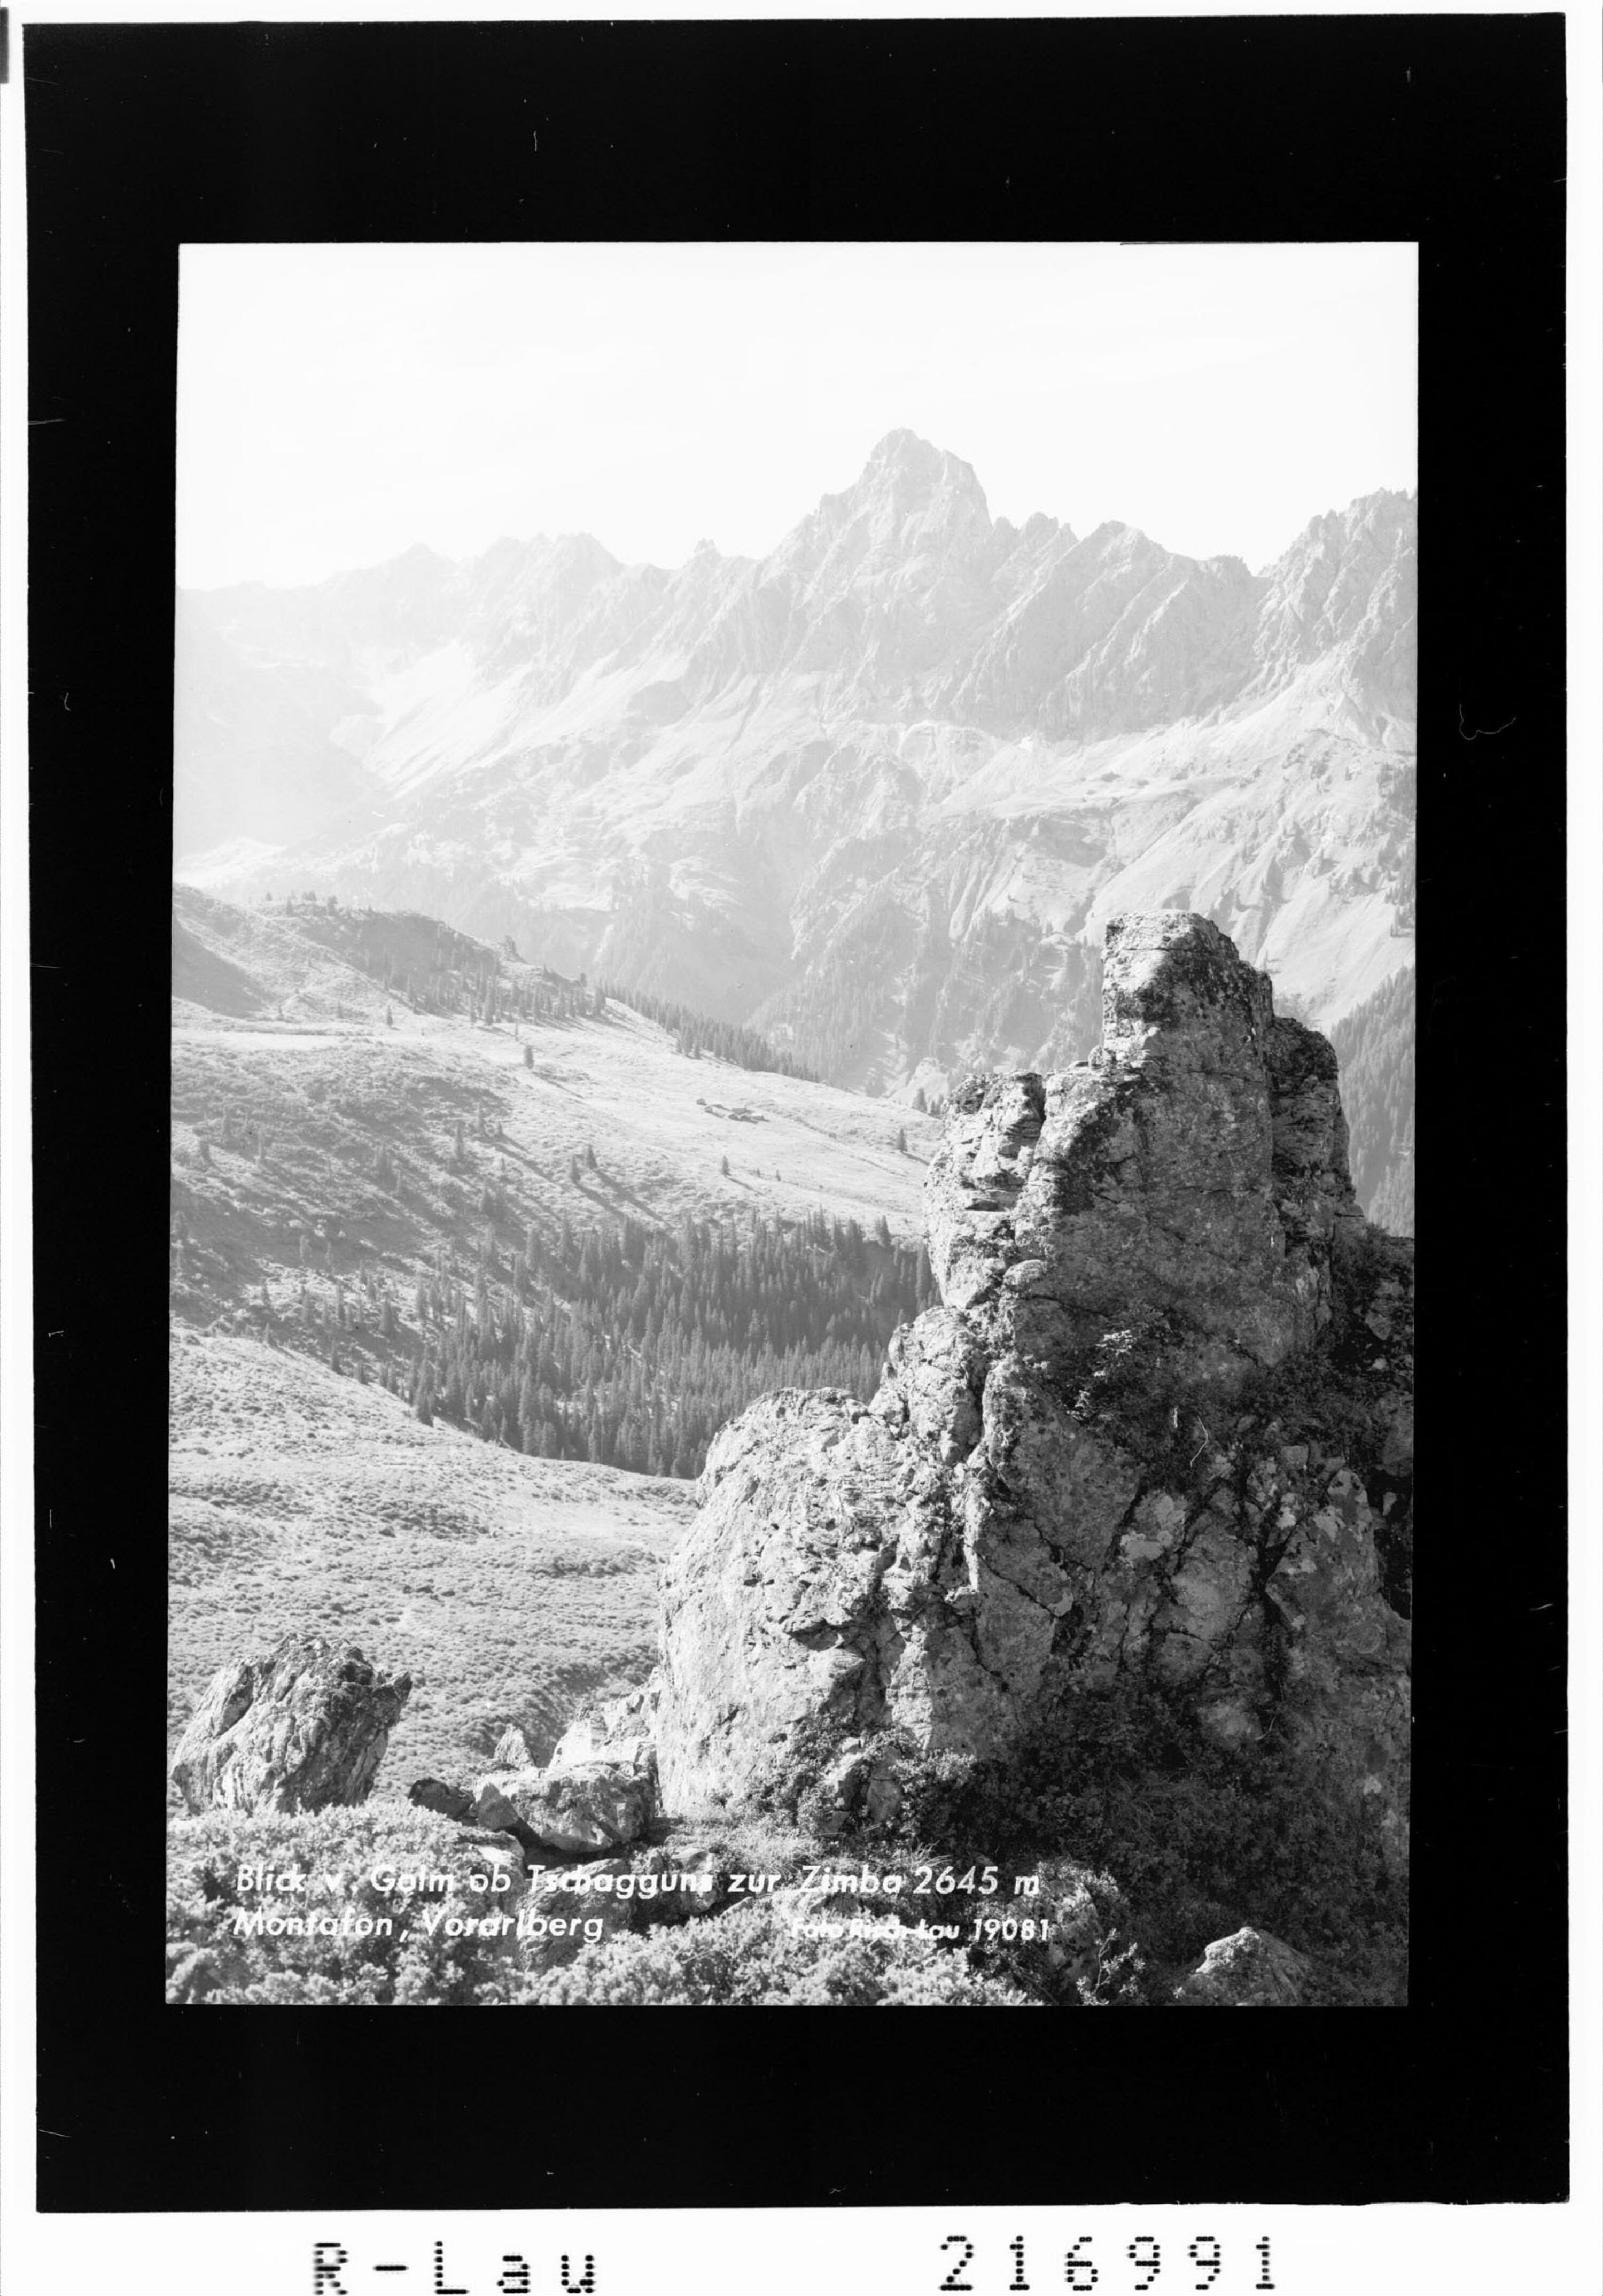 Blick vom Golm ob Tschagguns zur Zimba 2645 m Montafon / Vorarlberg></div>


    <hr>
    <div class=